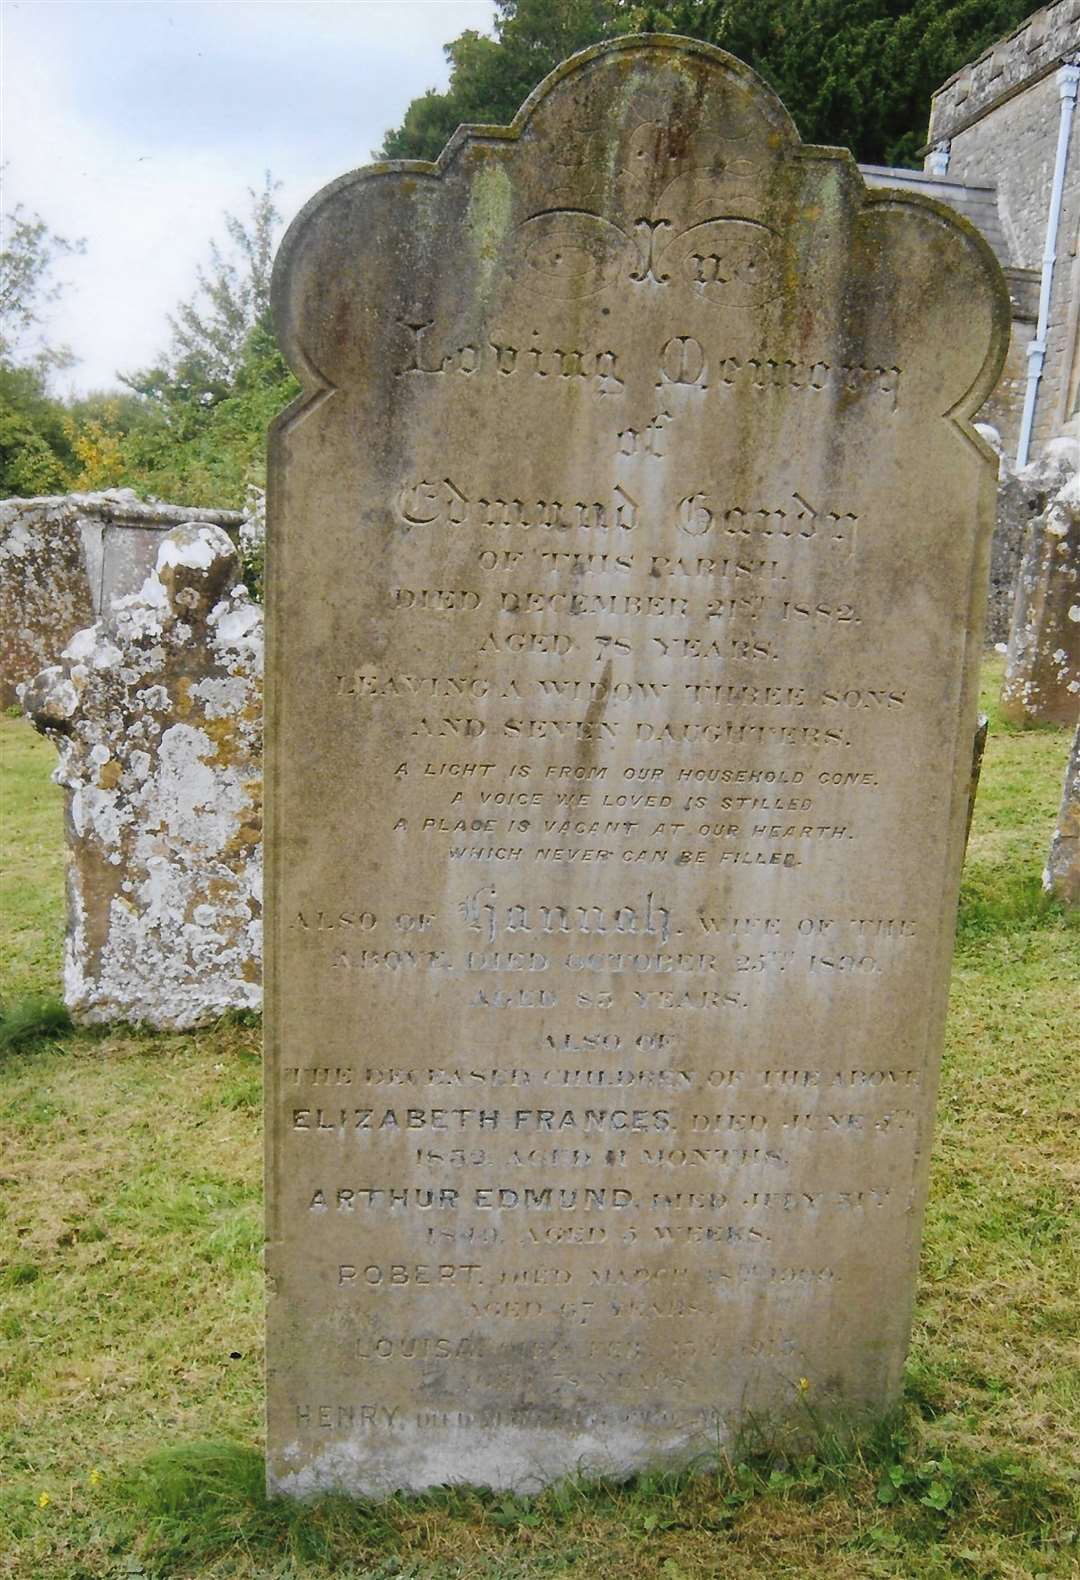 Edmund Gandy's gravestone in St Peter's churchyard in Boughton Monchelsea